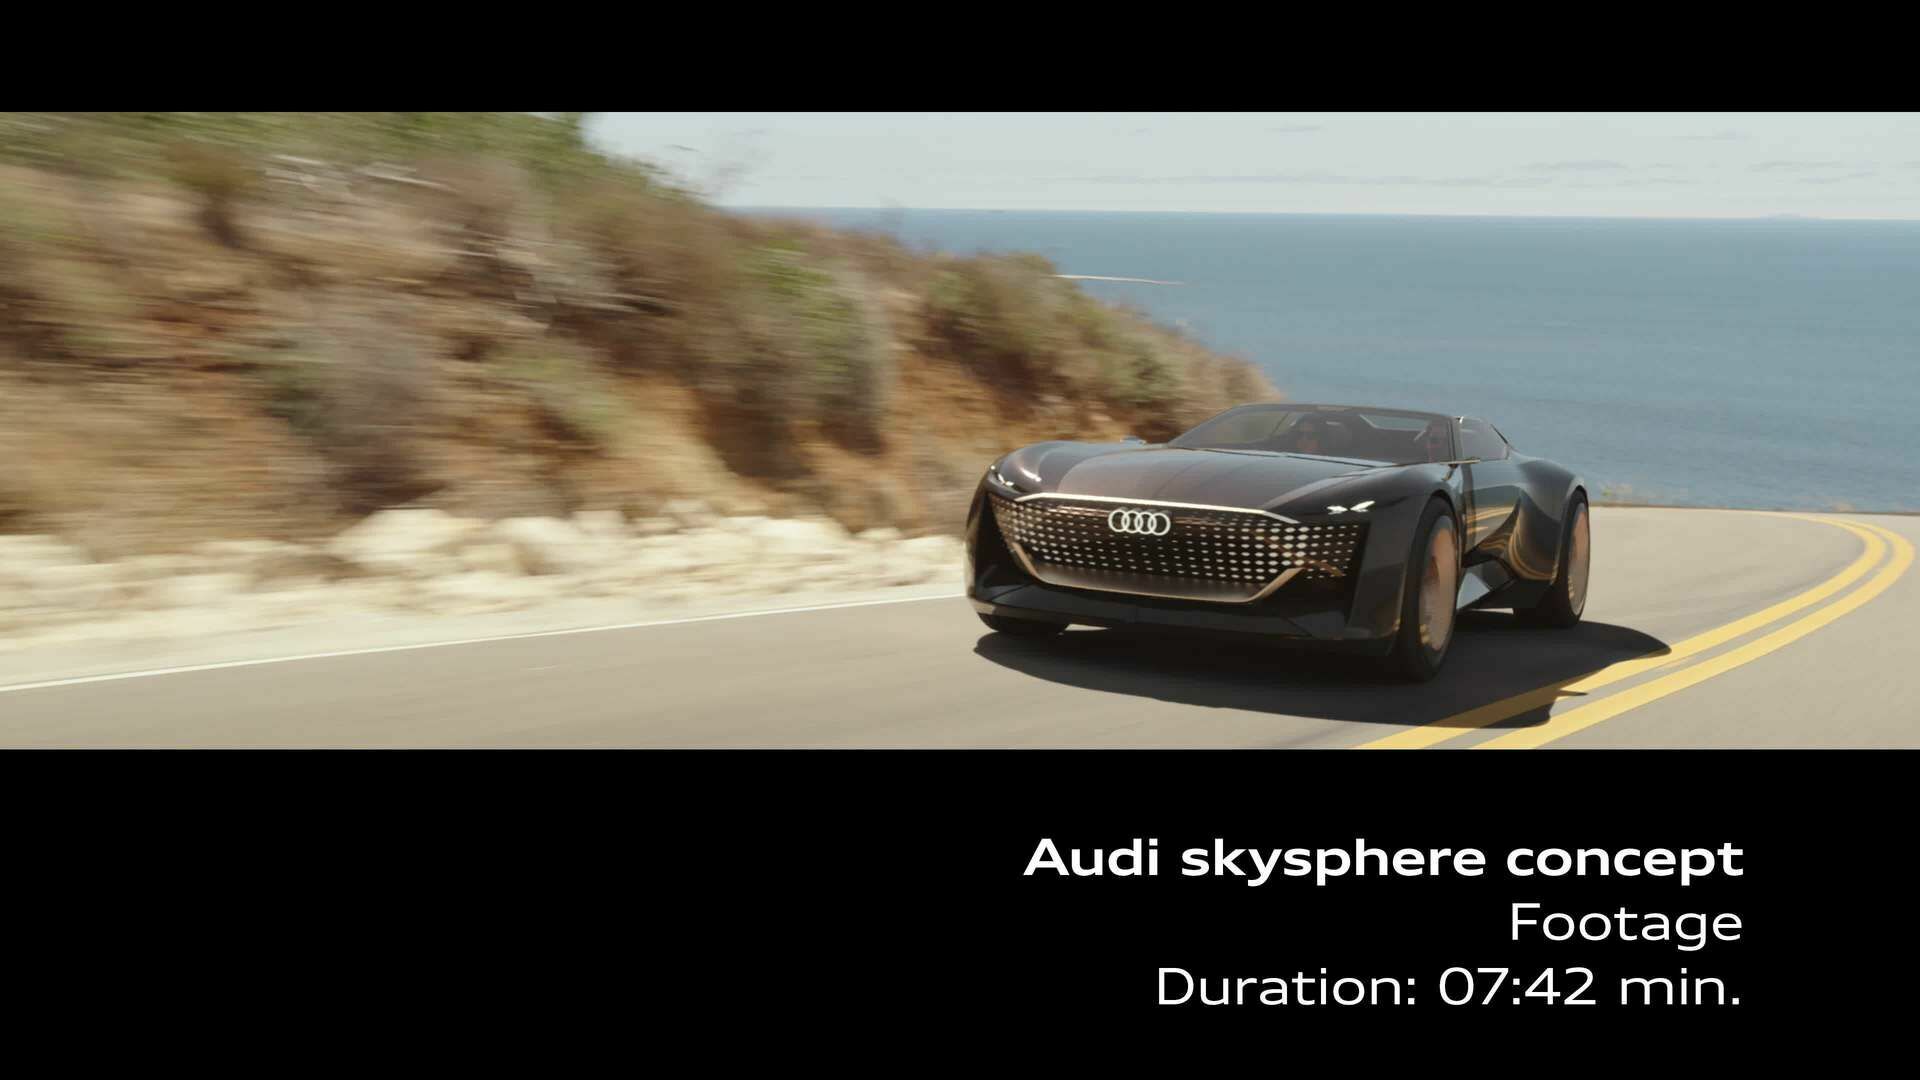 Footage: Audi skysphere concept